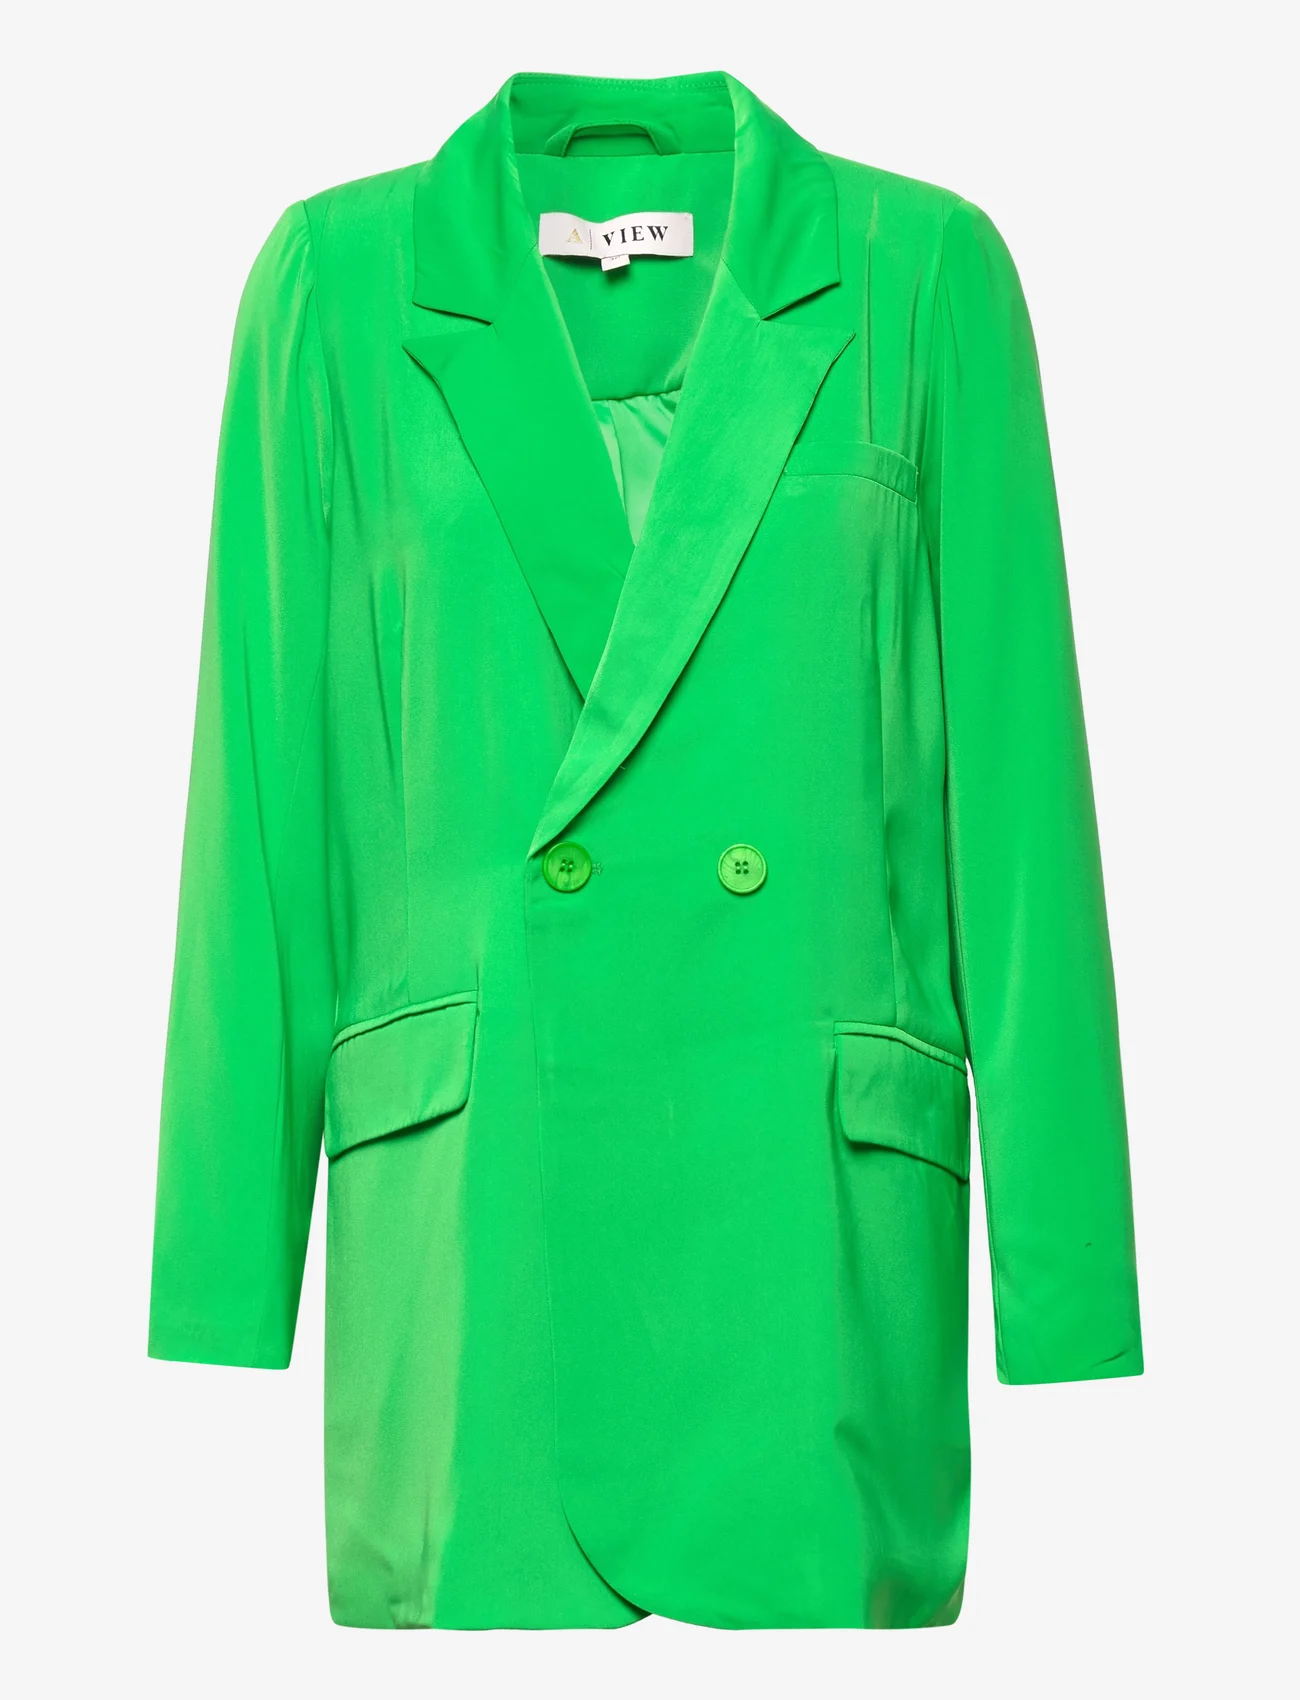 A-View - Annali blazer - feestelijke kleding voor outlet-prijzen - green - 0